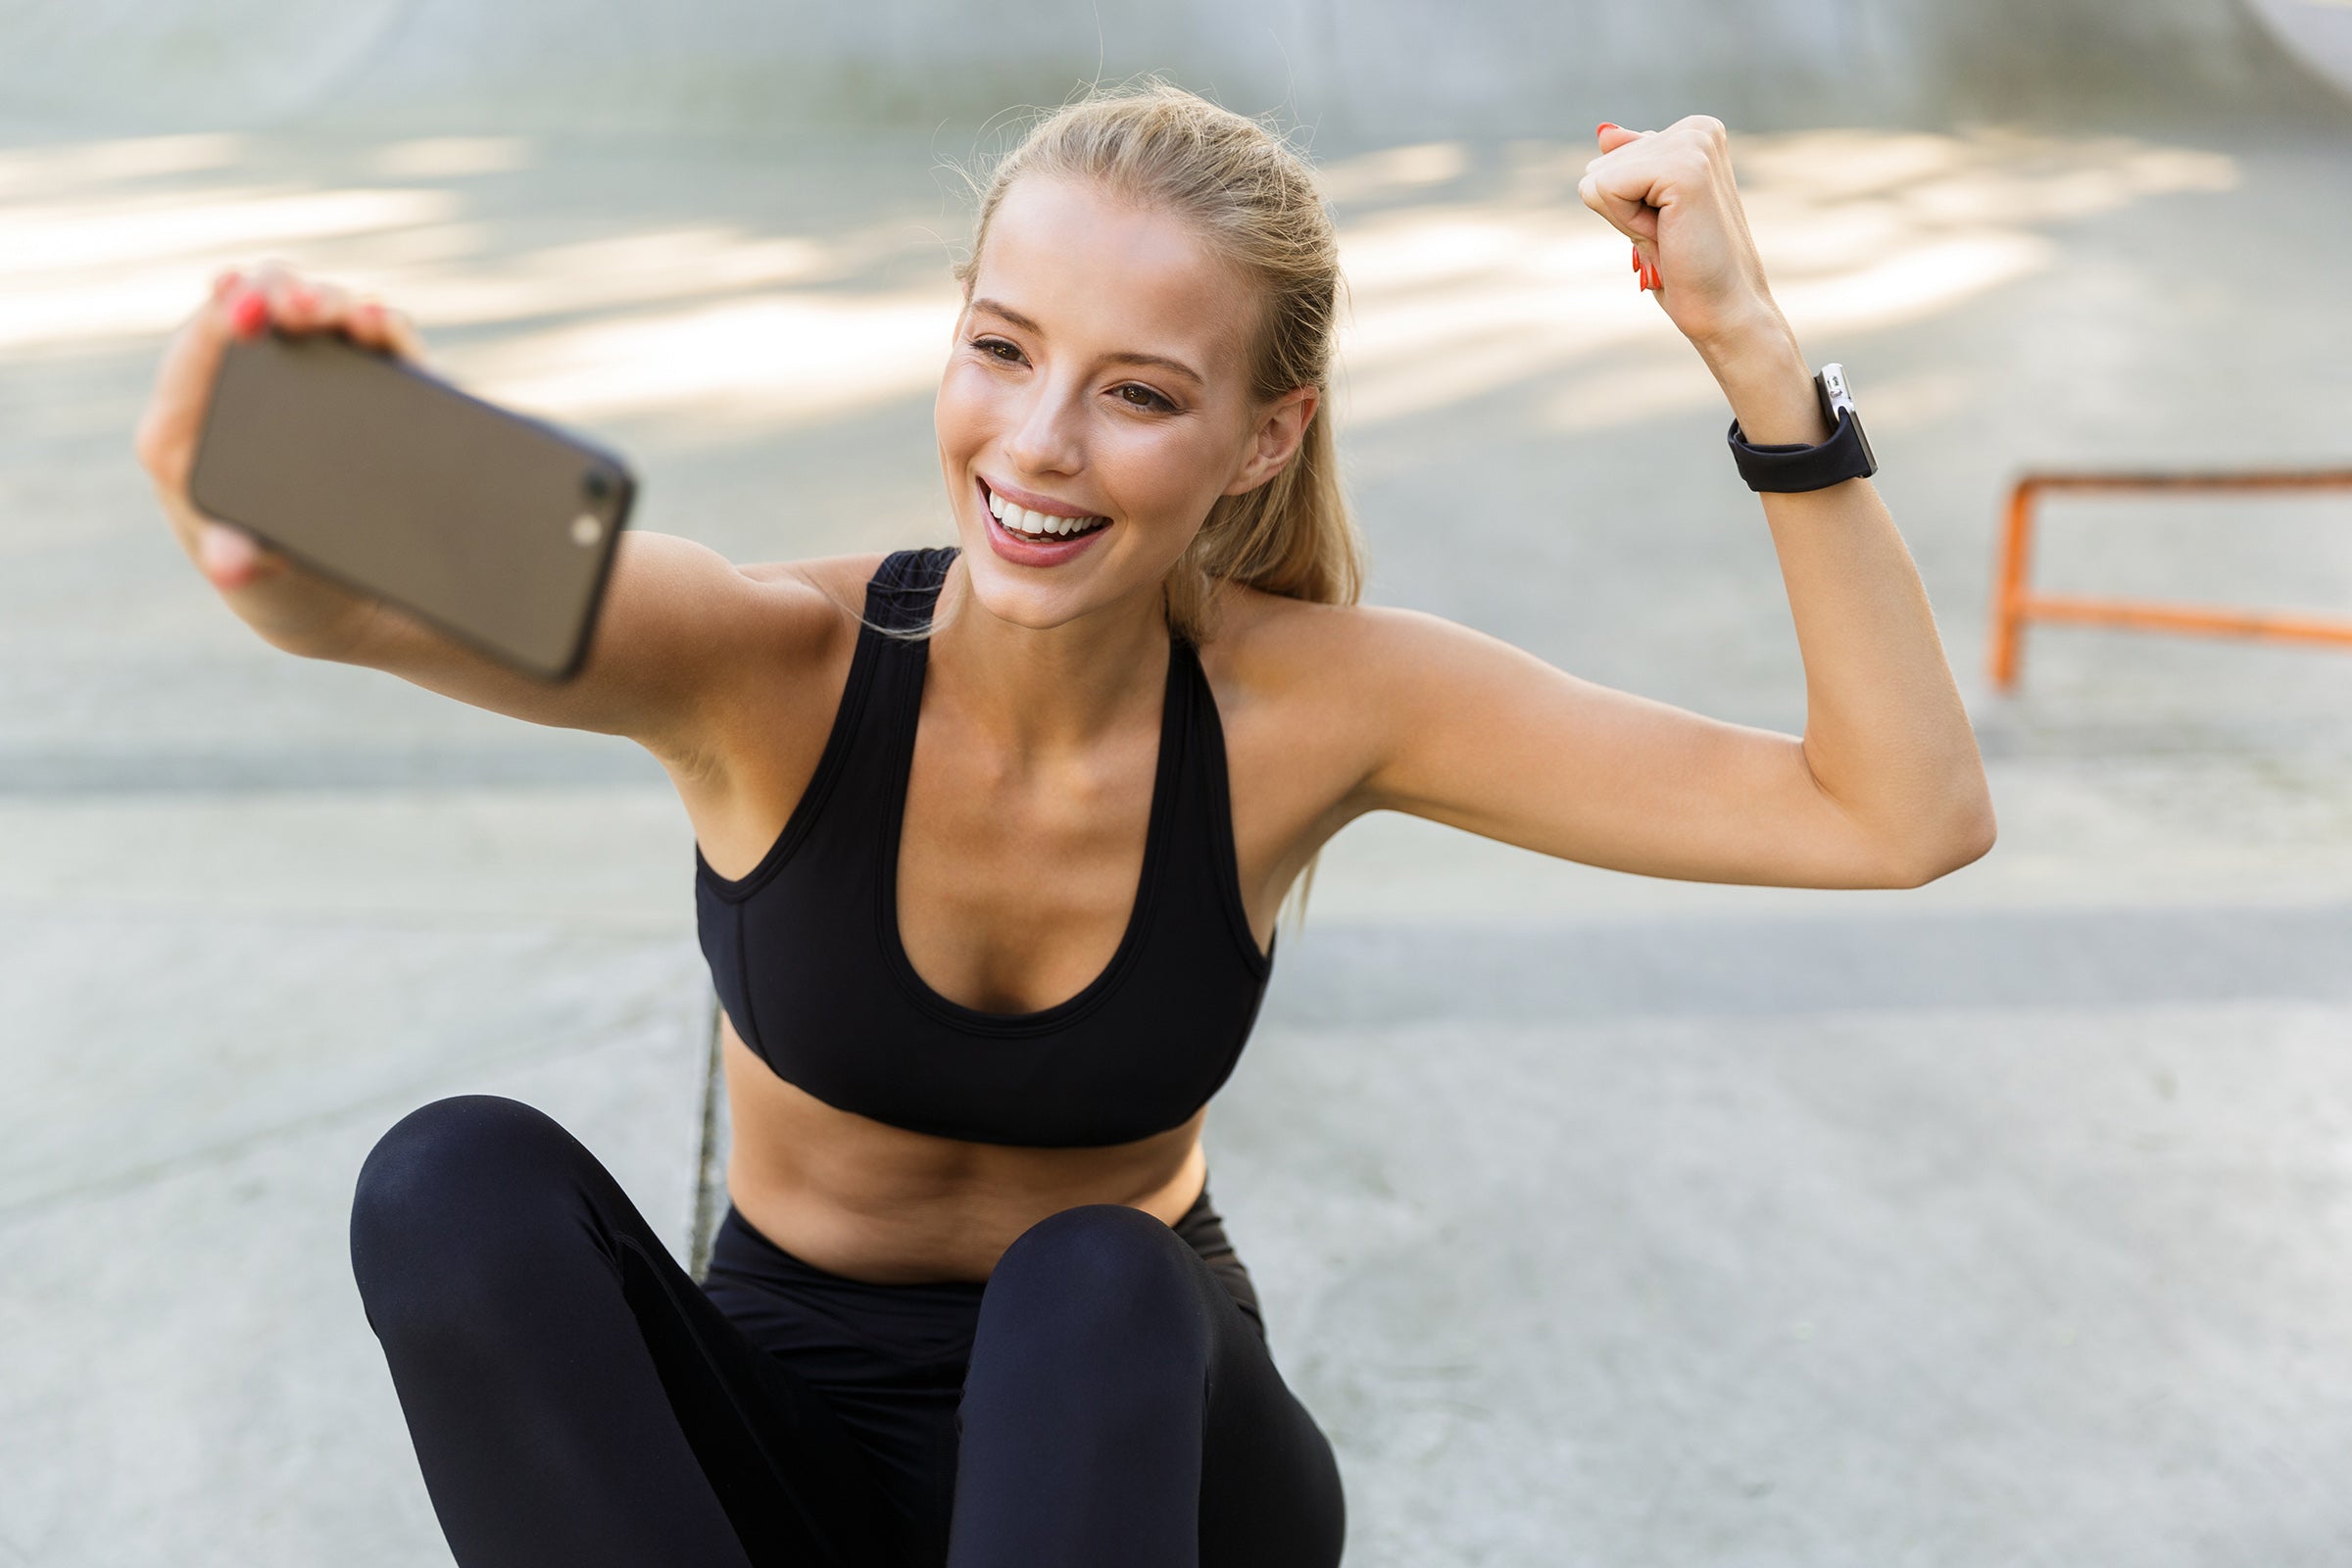 Exercise boosts self-esteem